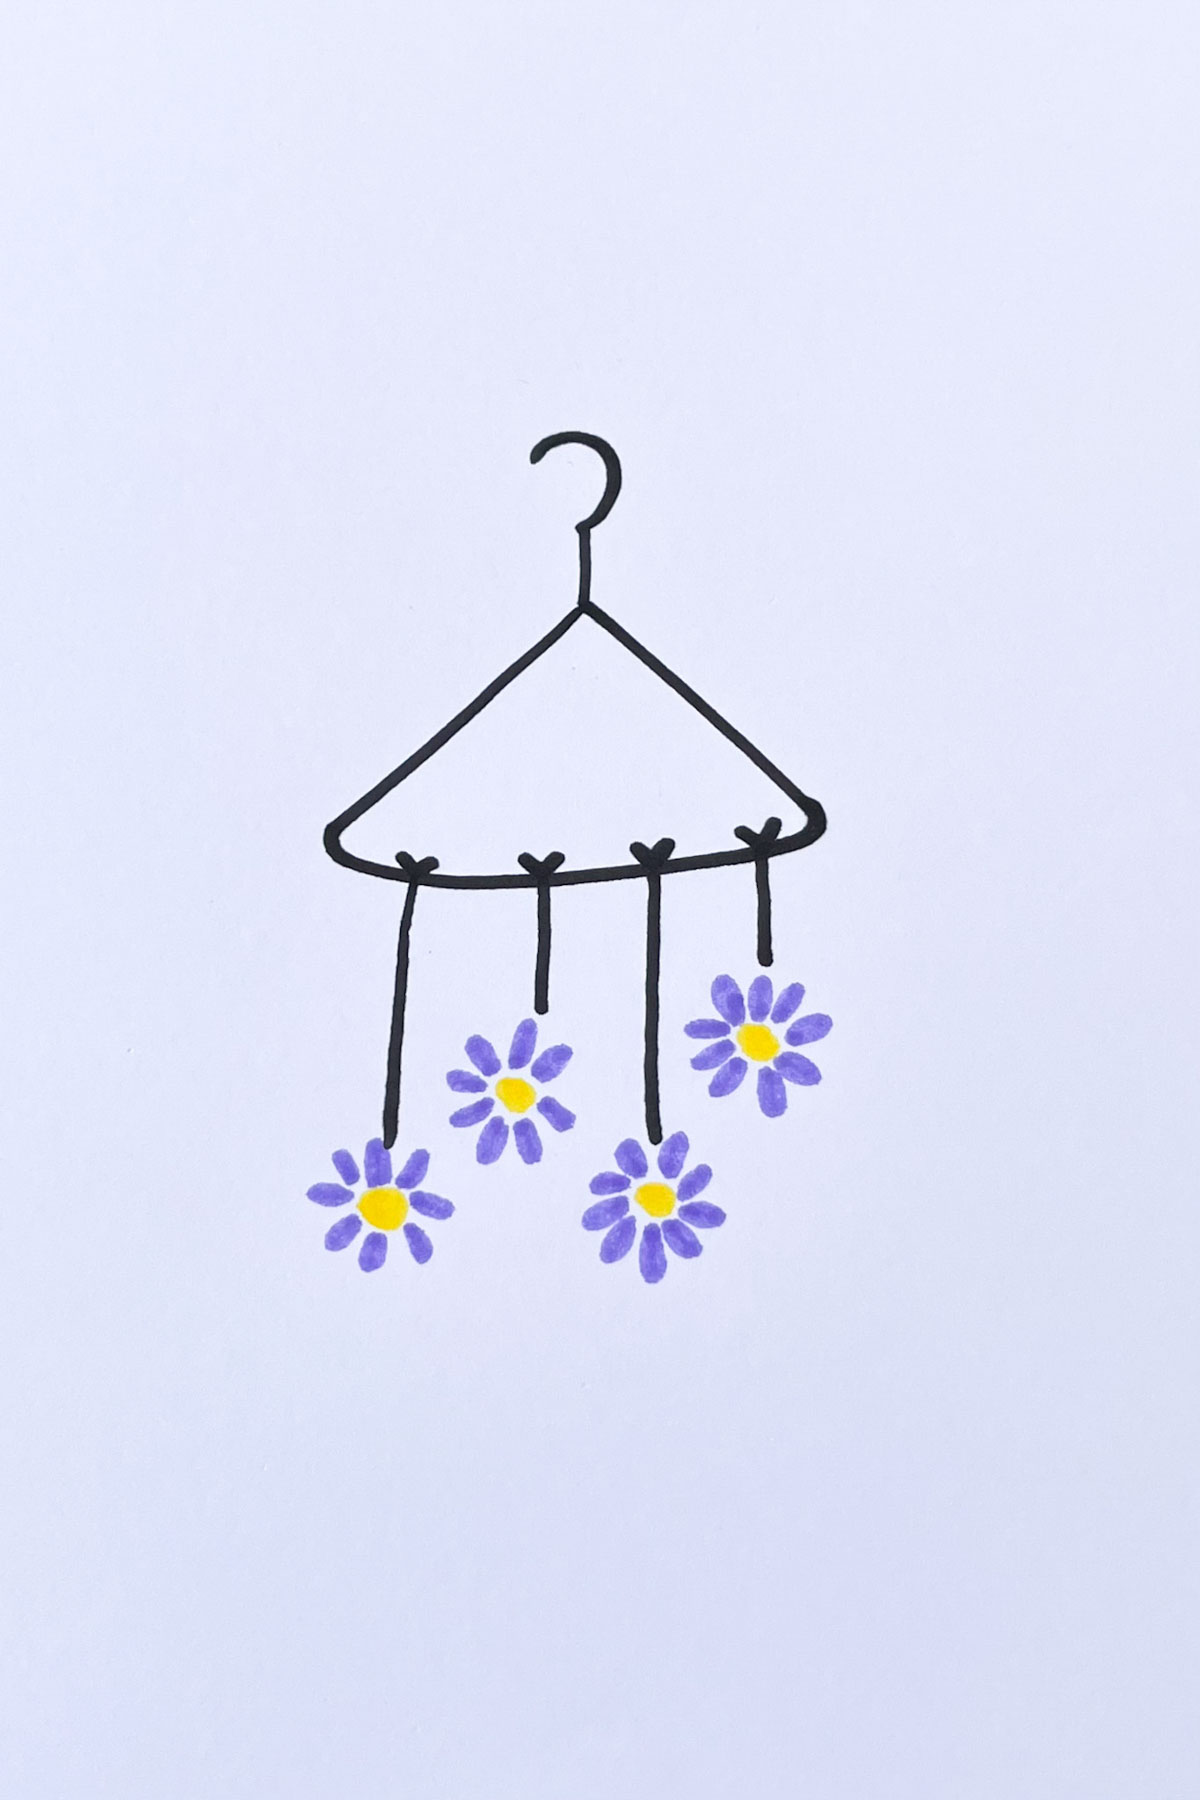 hanging flowers drawing